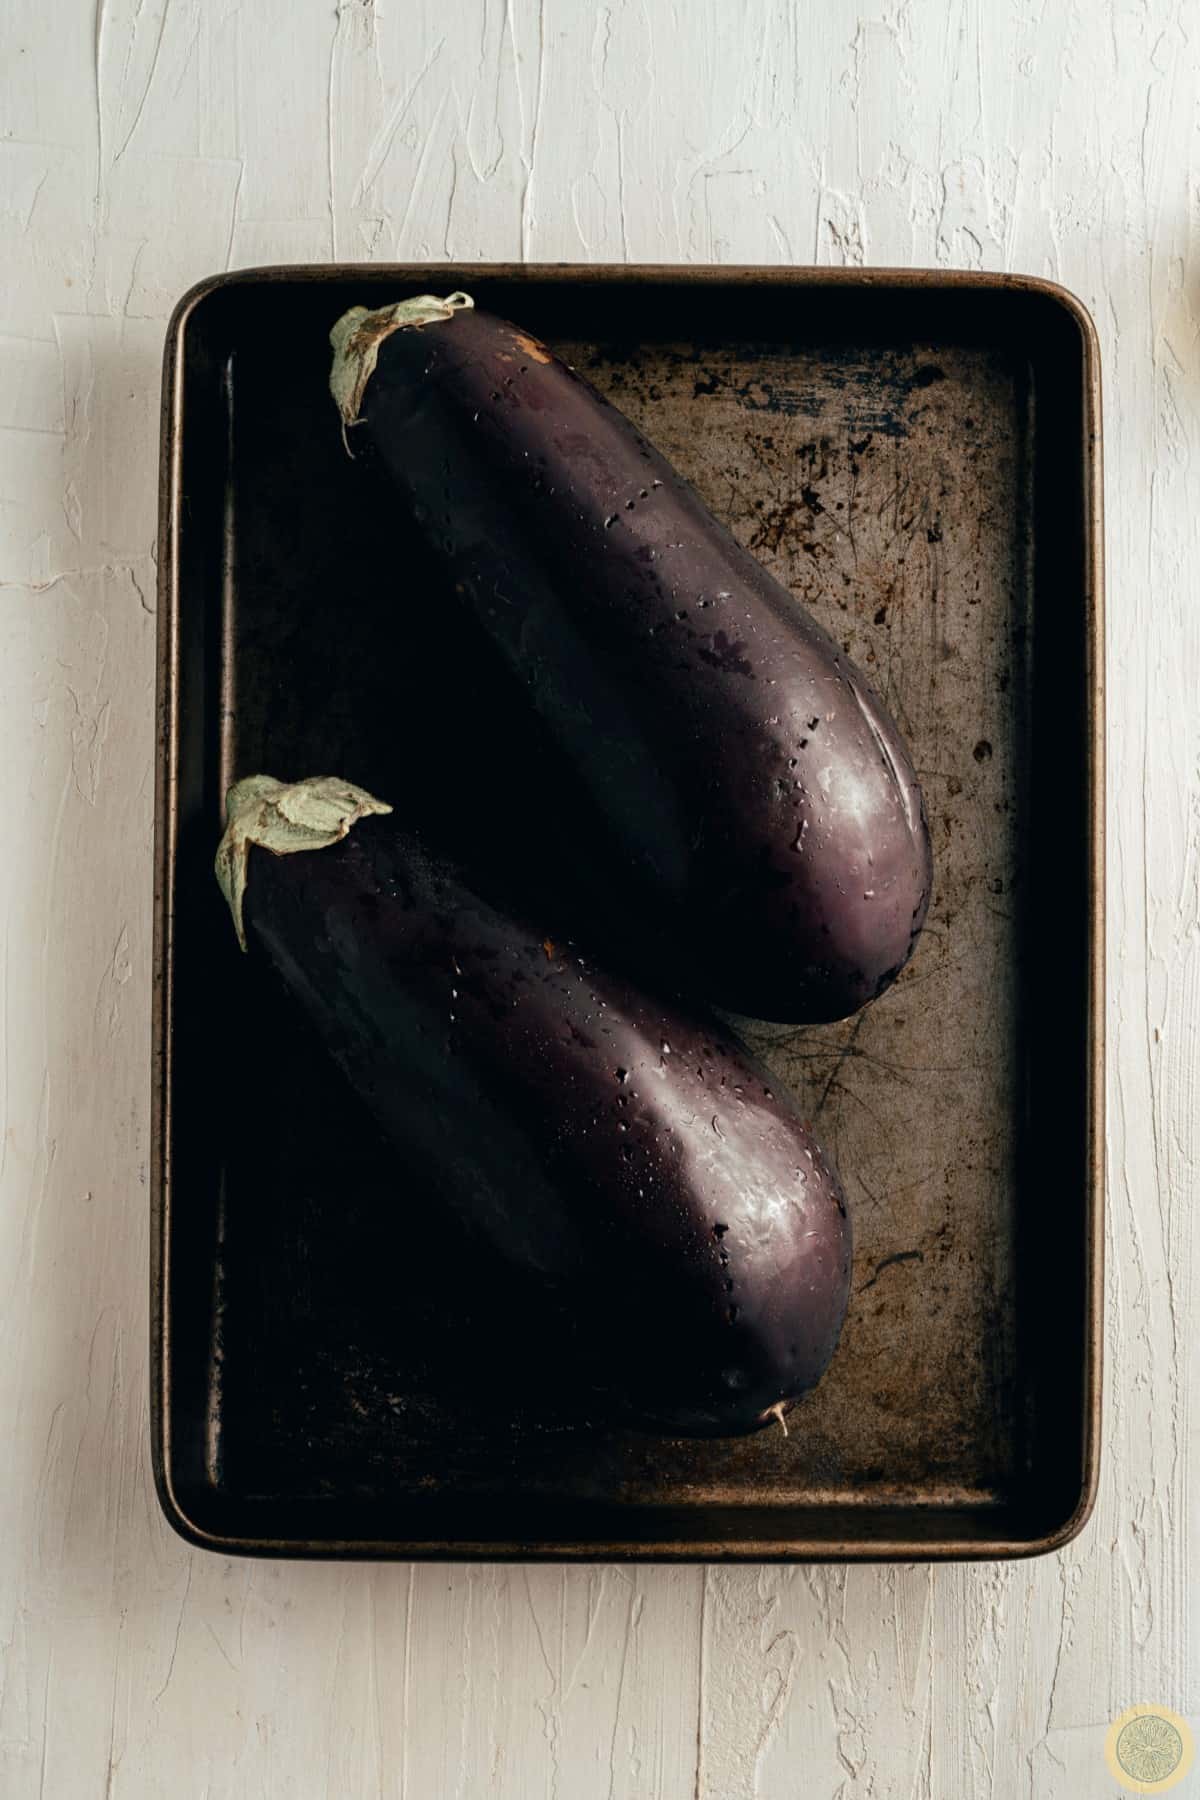 How to Make Eggplant Dip